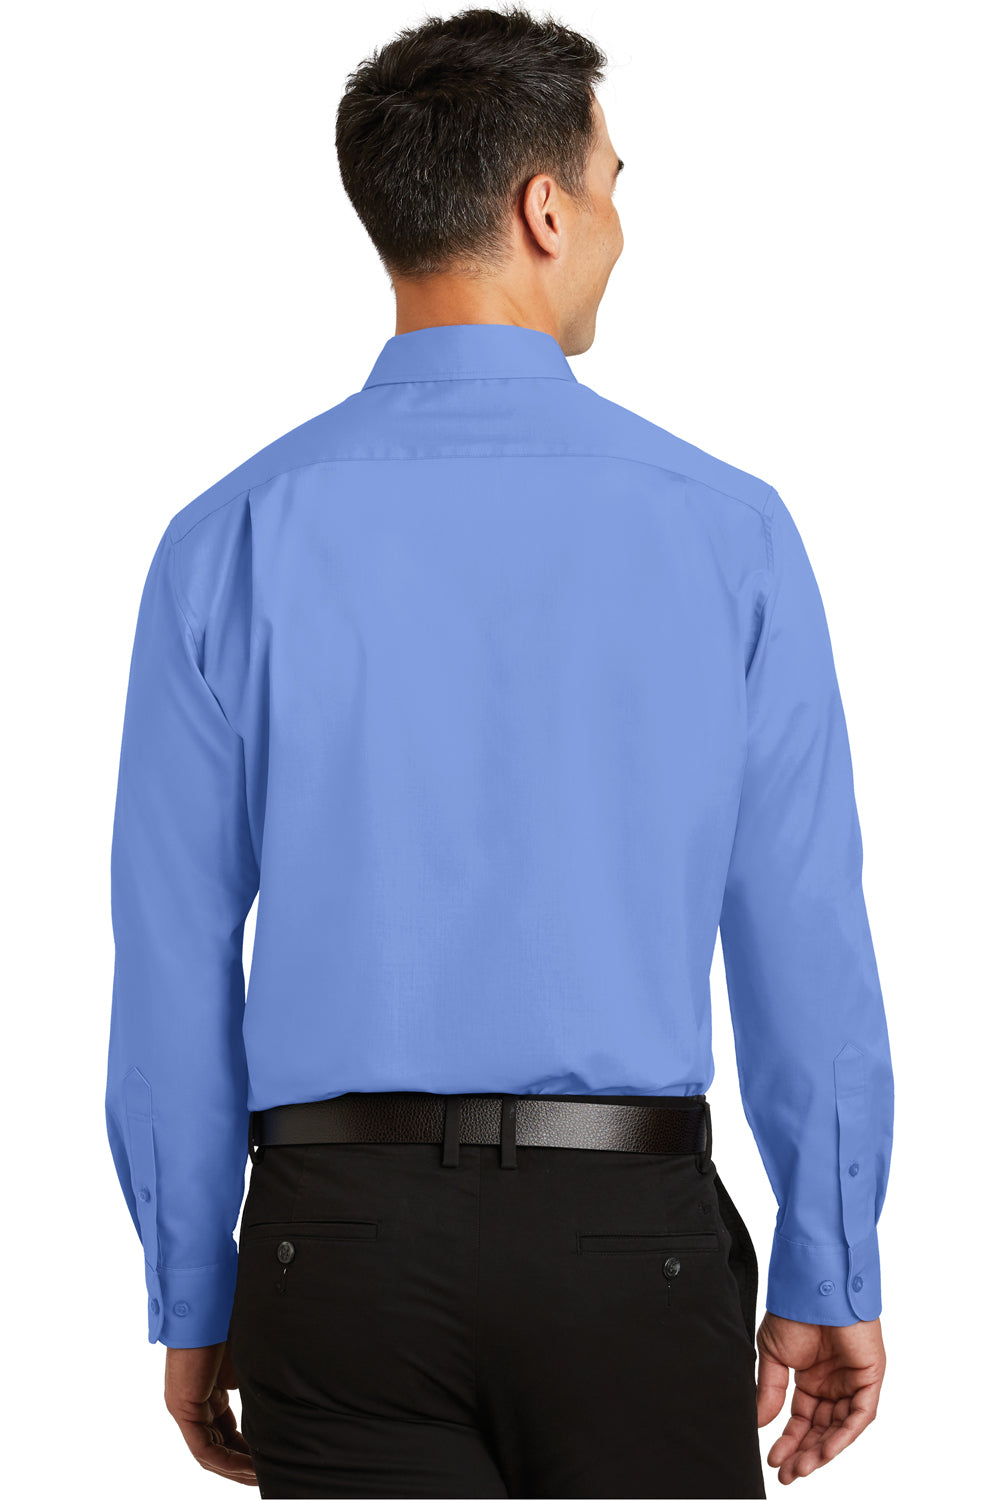 Port Authority S663 Mens SuperPro Wrinkle Resistant Long Sleeve Button Down Shirt w/ Pocket Ultramarine Blue Back